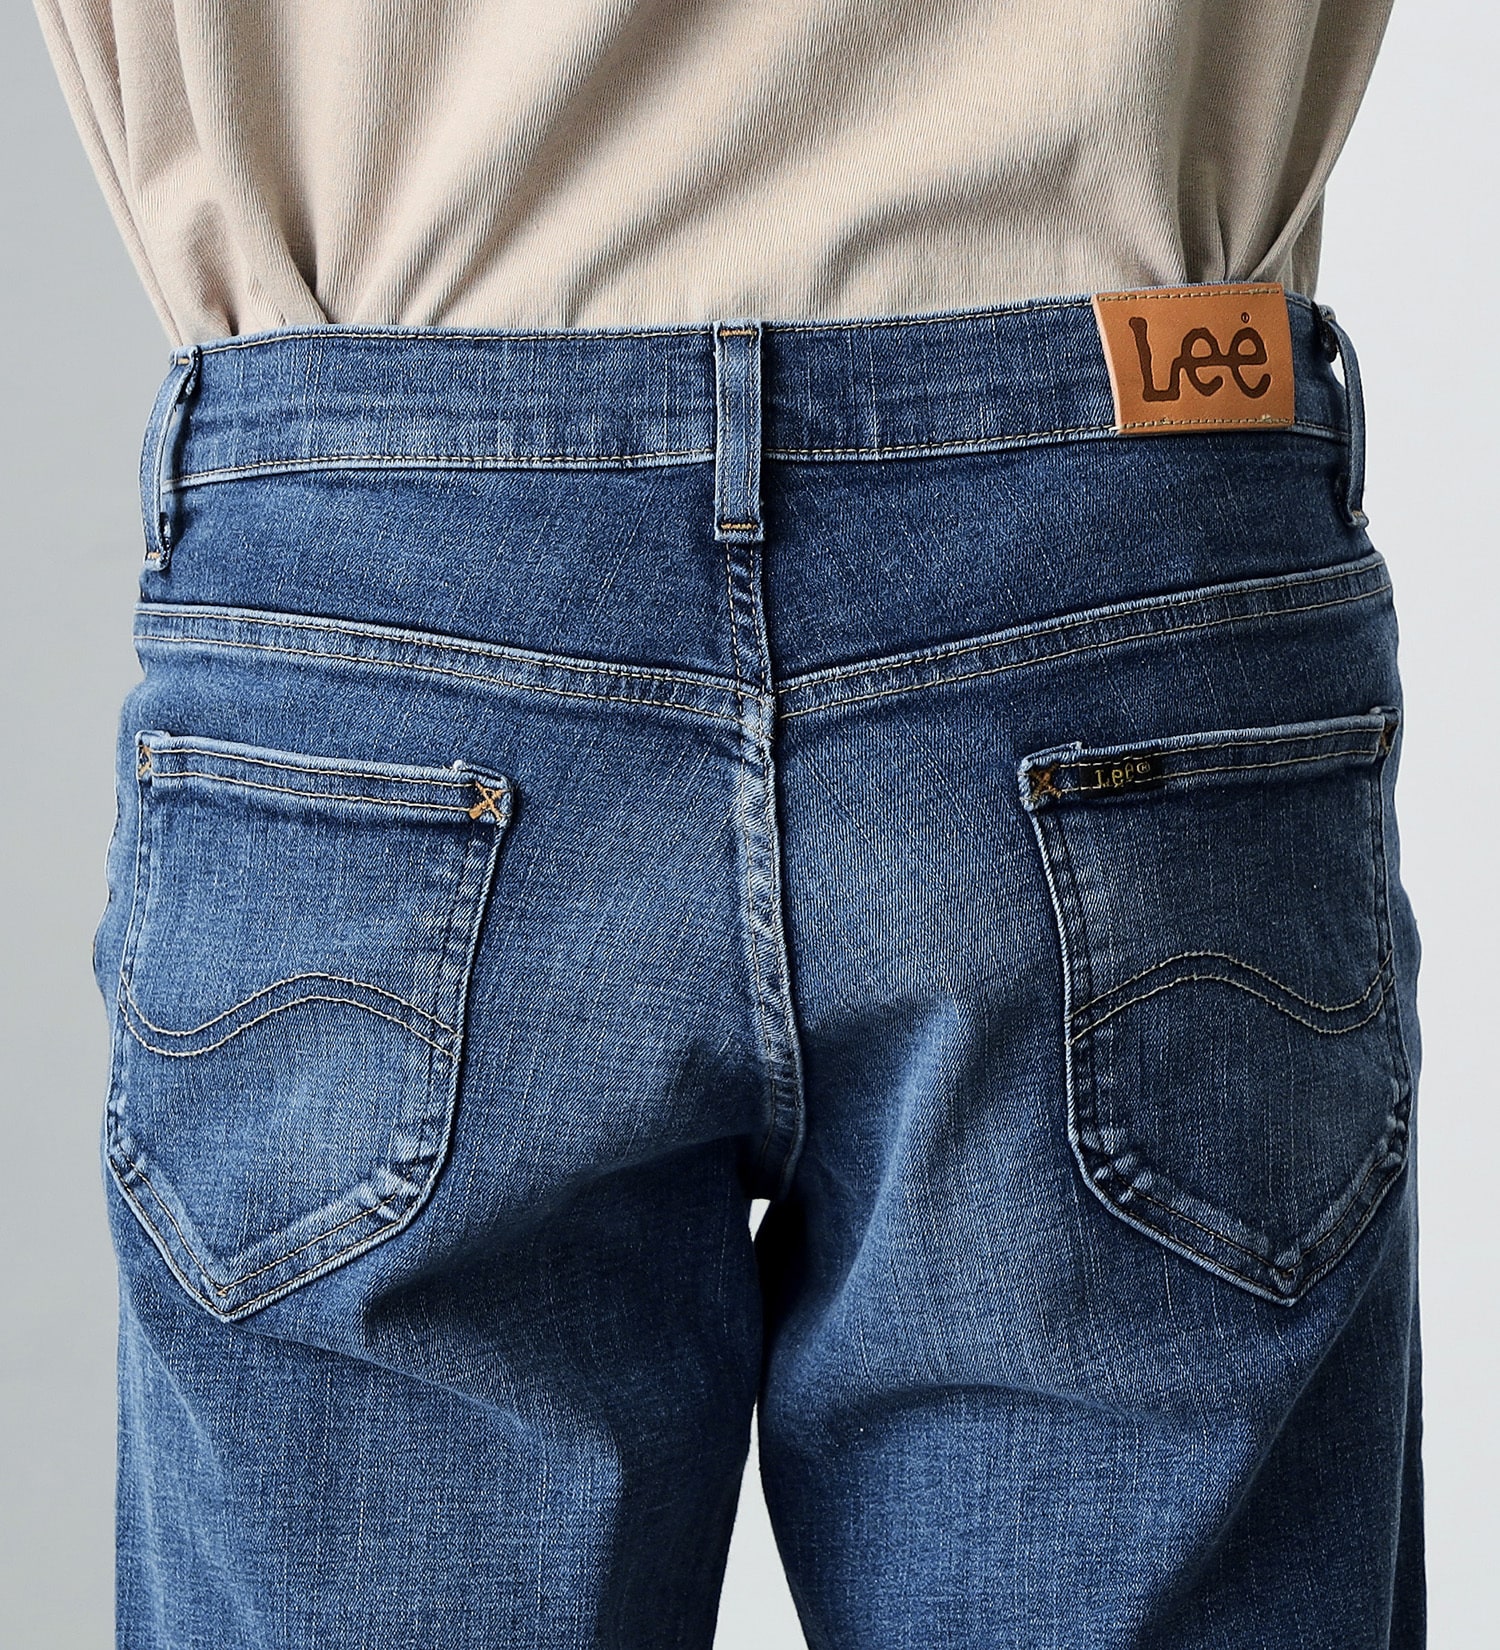 Lee(リー)の【GW SALE】【超快適ストレッチ】キャロット スキニーパンツ|パンツ/デニムパンツ/メンズ|中色ブルー